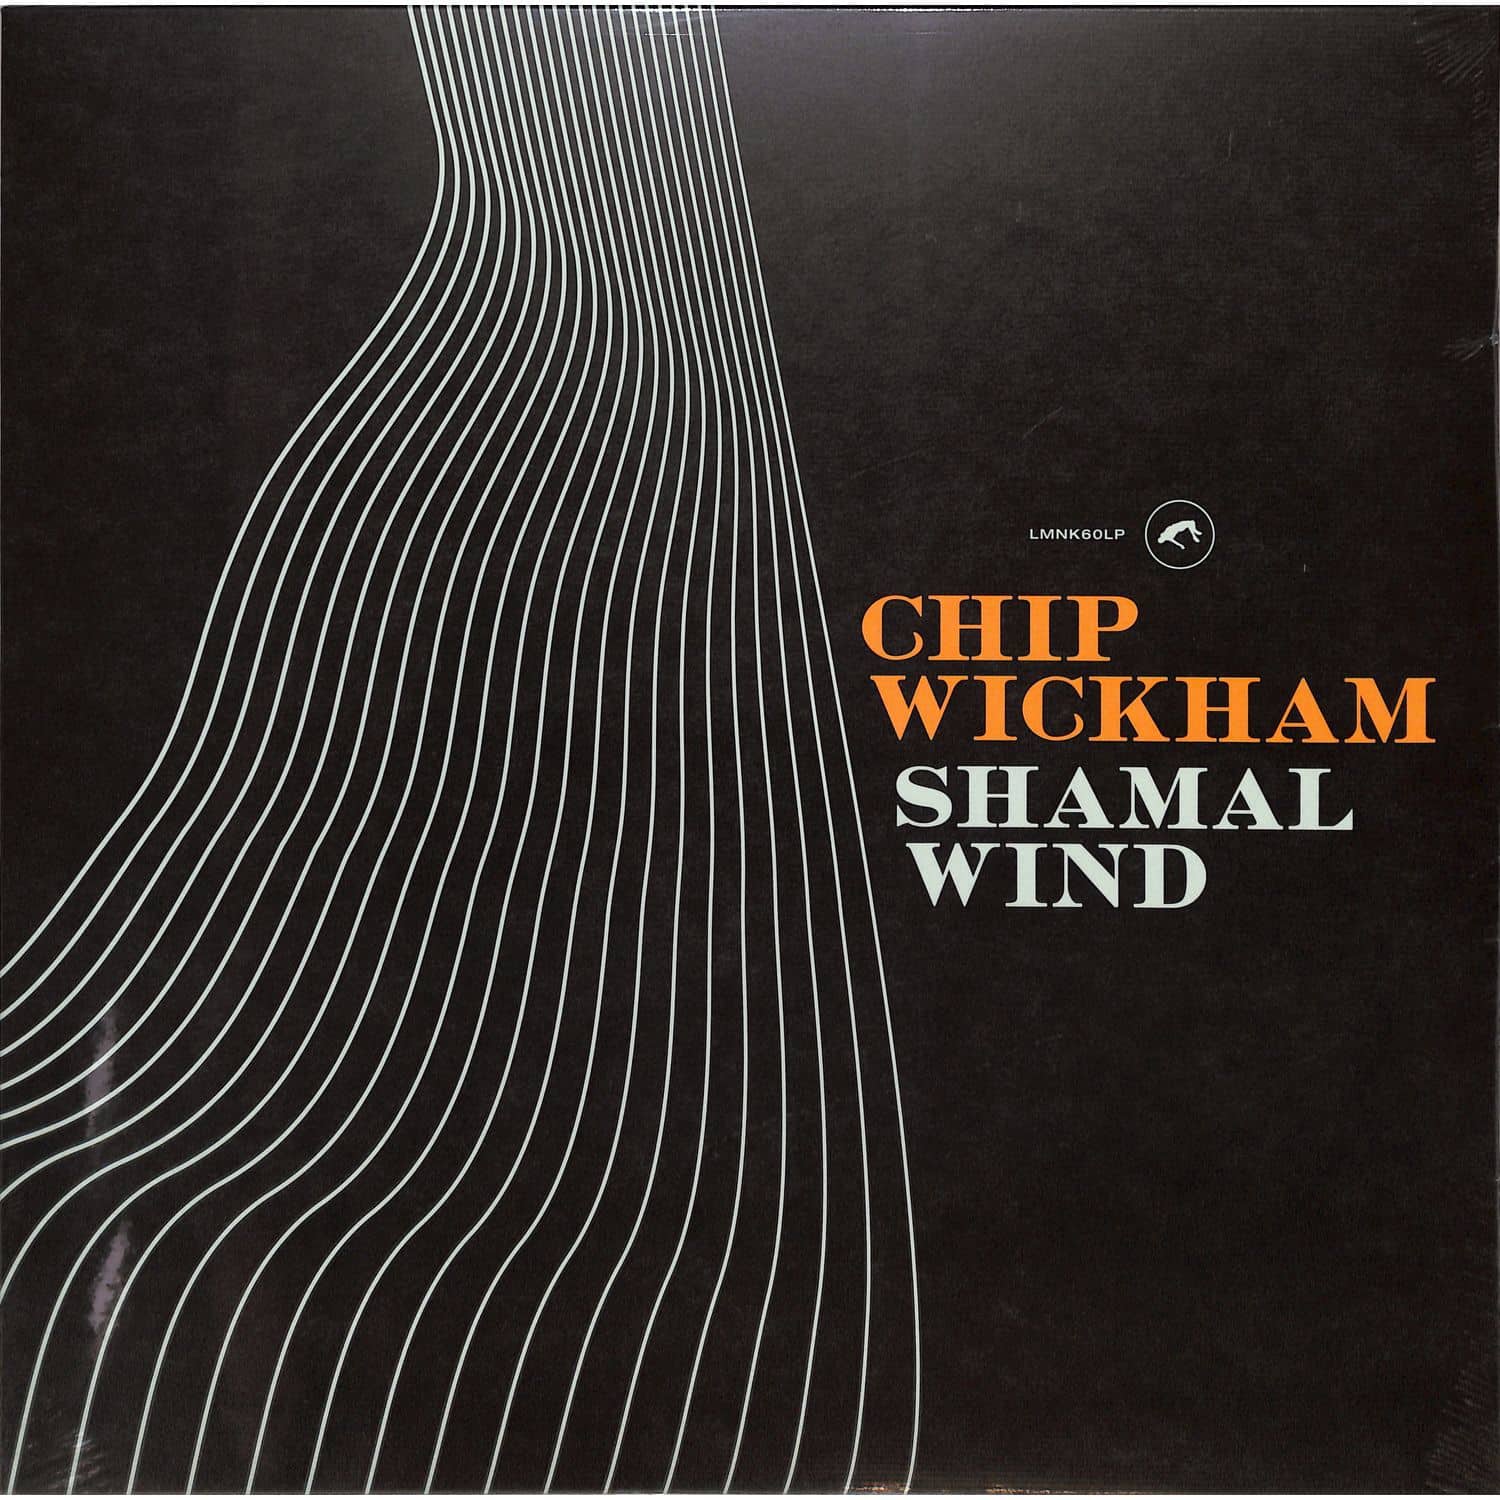 Chip Wickham - SHAMAL WIND 